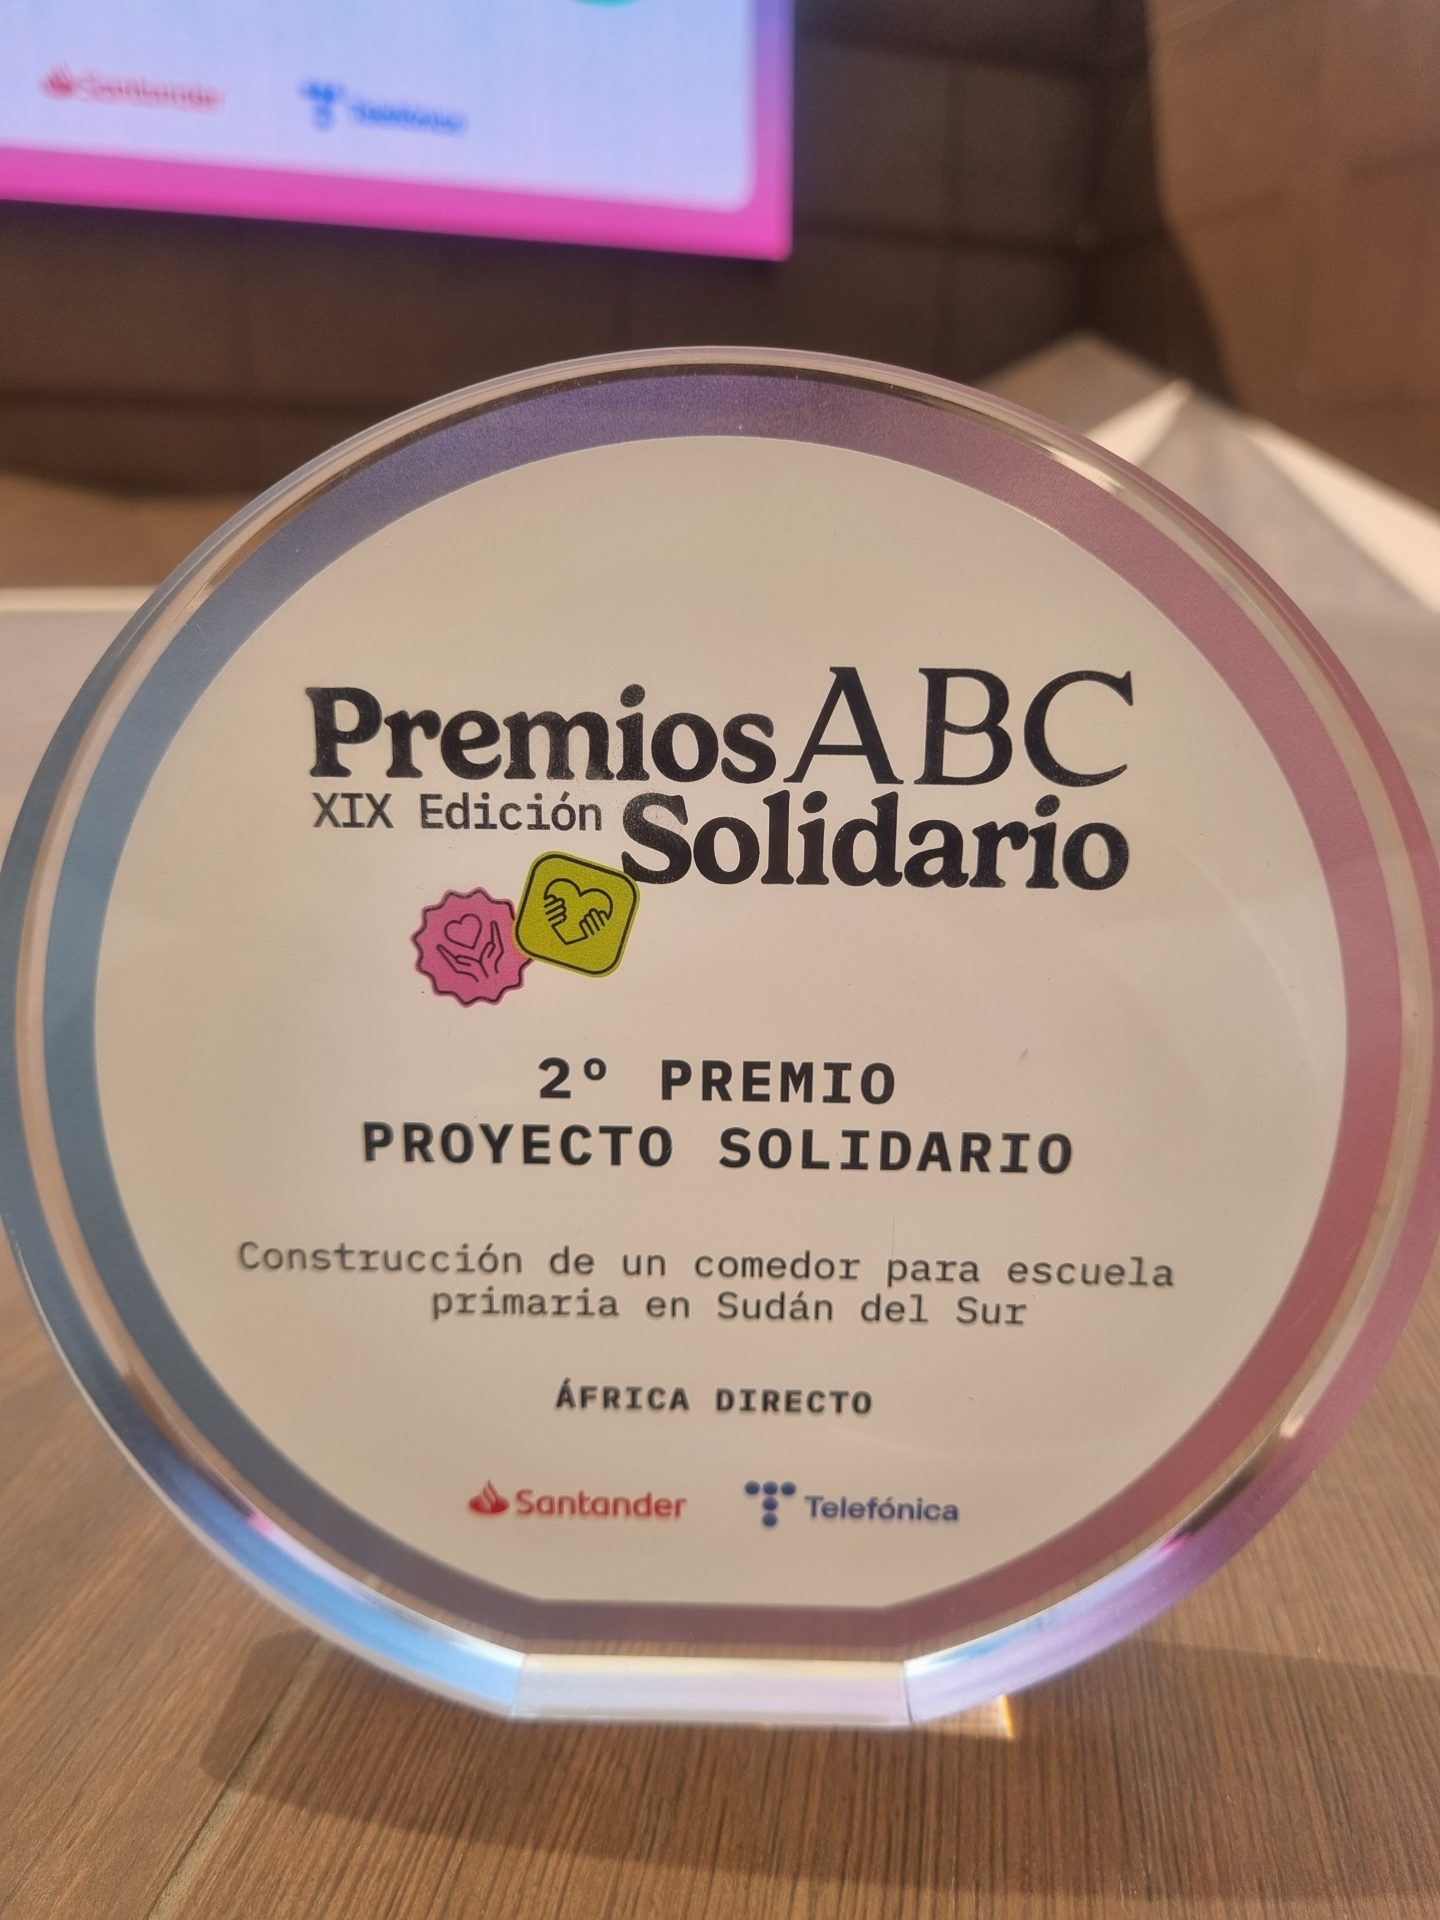 premios abc solidario XIX edición